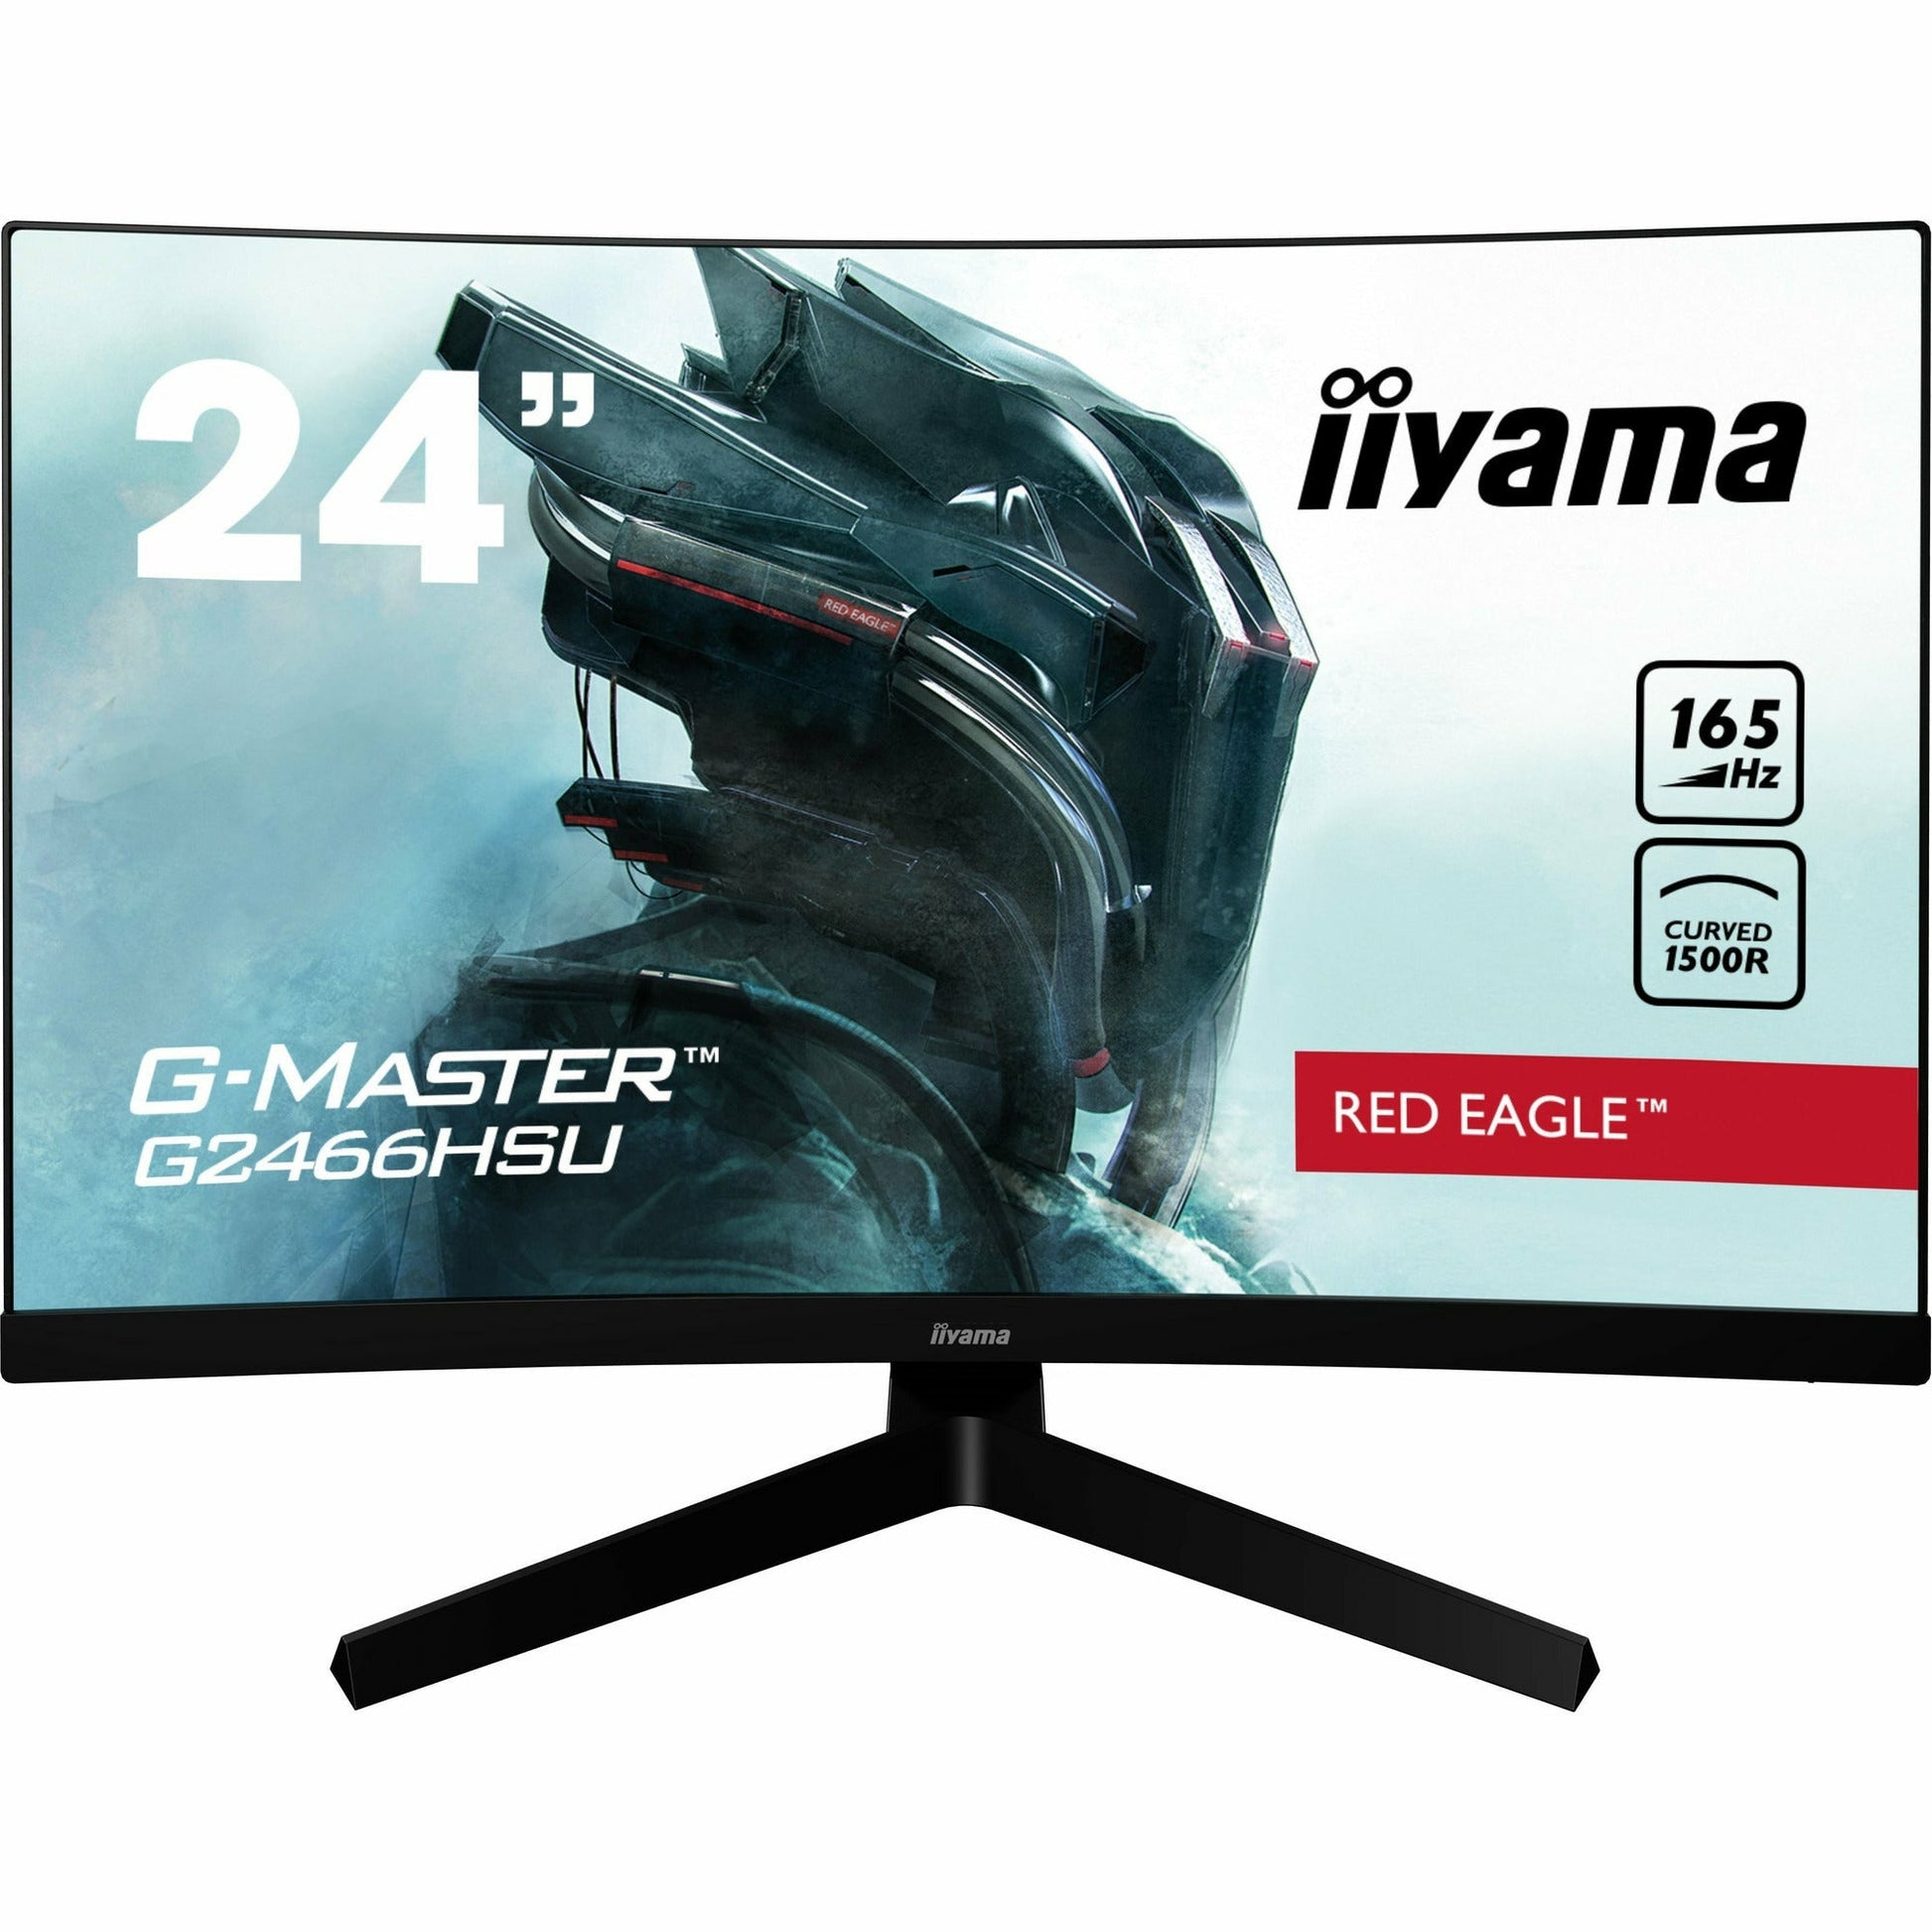 iiyama G-Master G2466HSU-B1 24" 165Hz 1ms 1500R Fixed Stand Curved Gaming Monitor